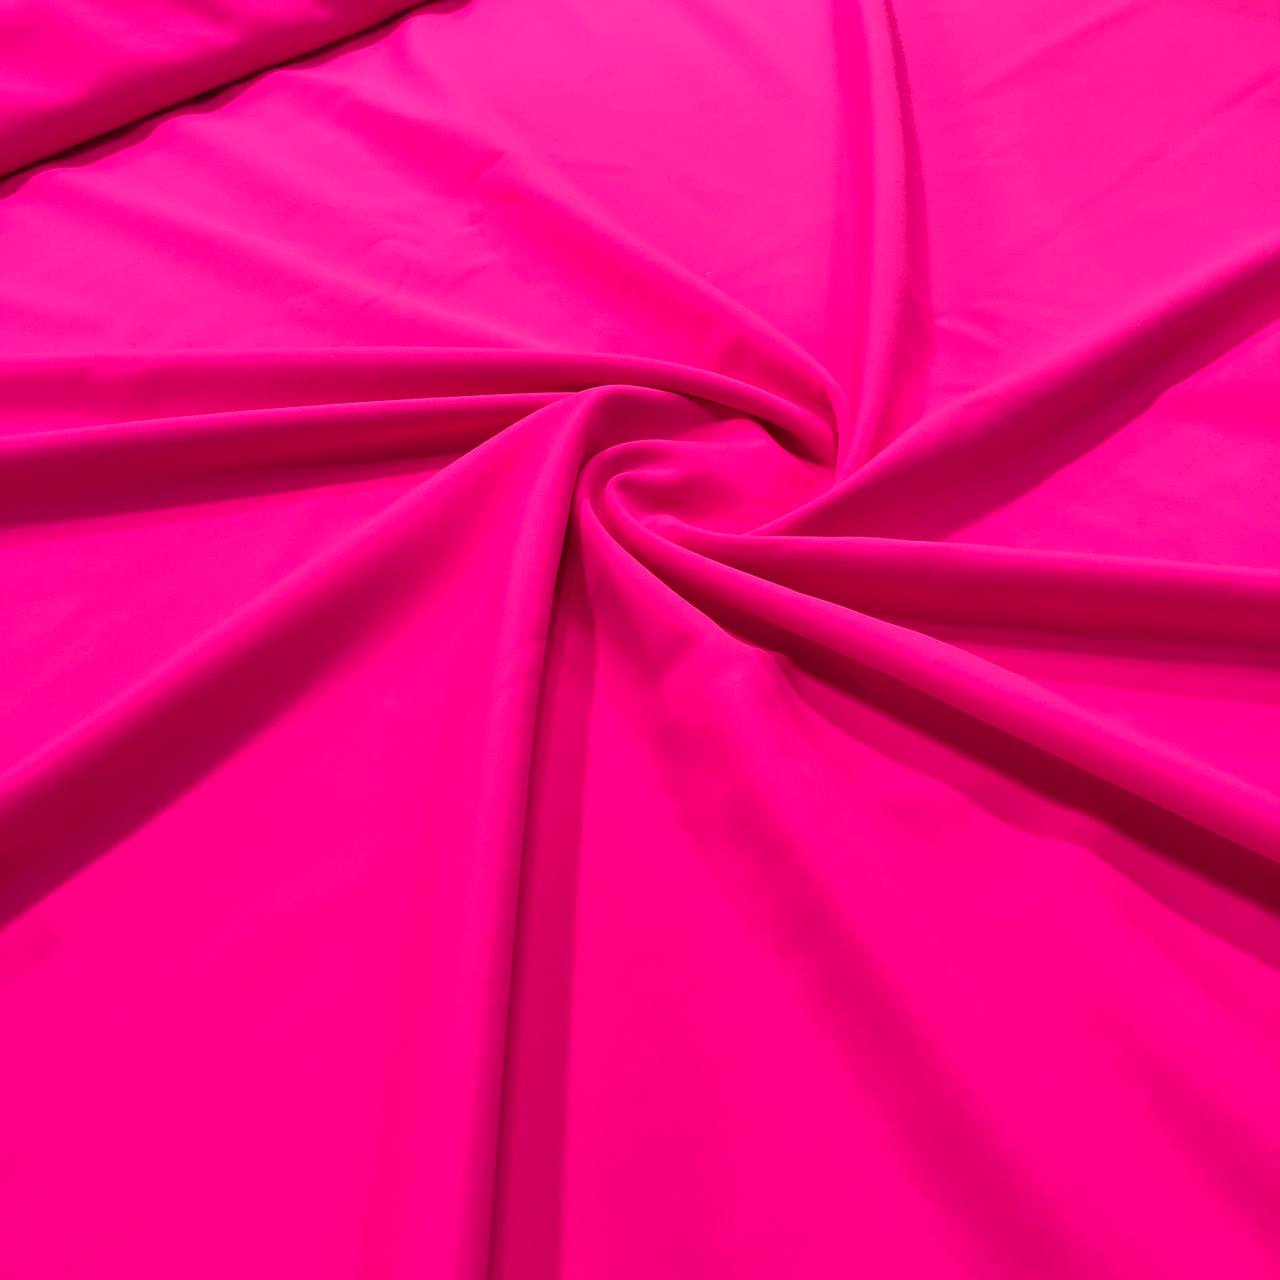 Solid Bright Fuchsia Pink 4 Way Stretch 10 oz Cotton Lycra Jersey